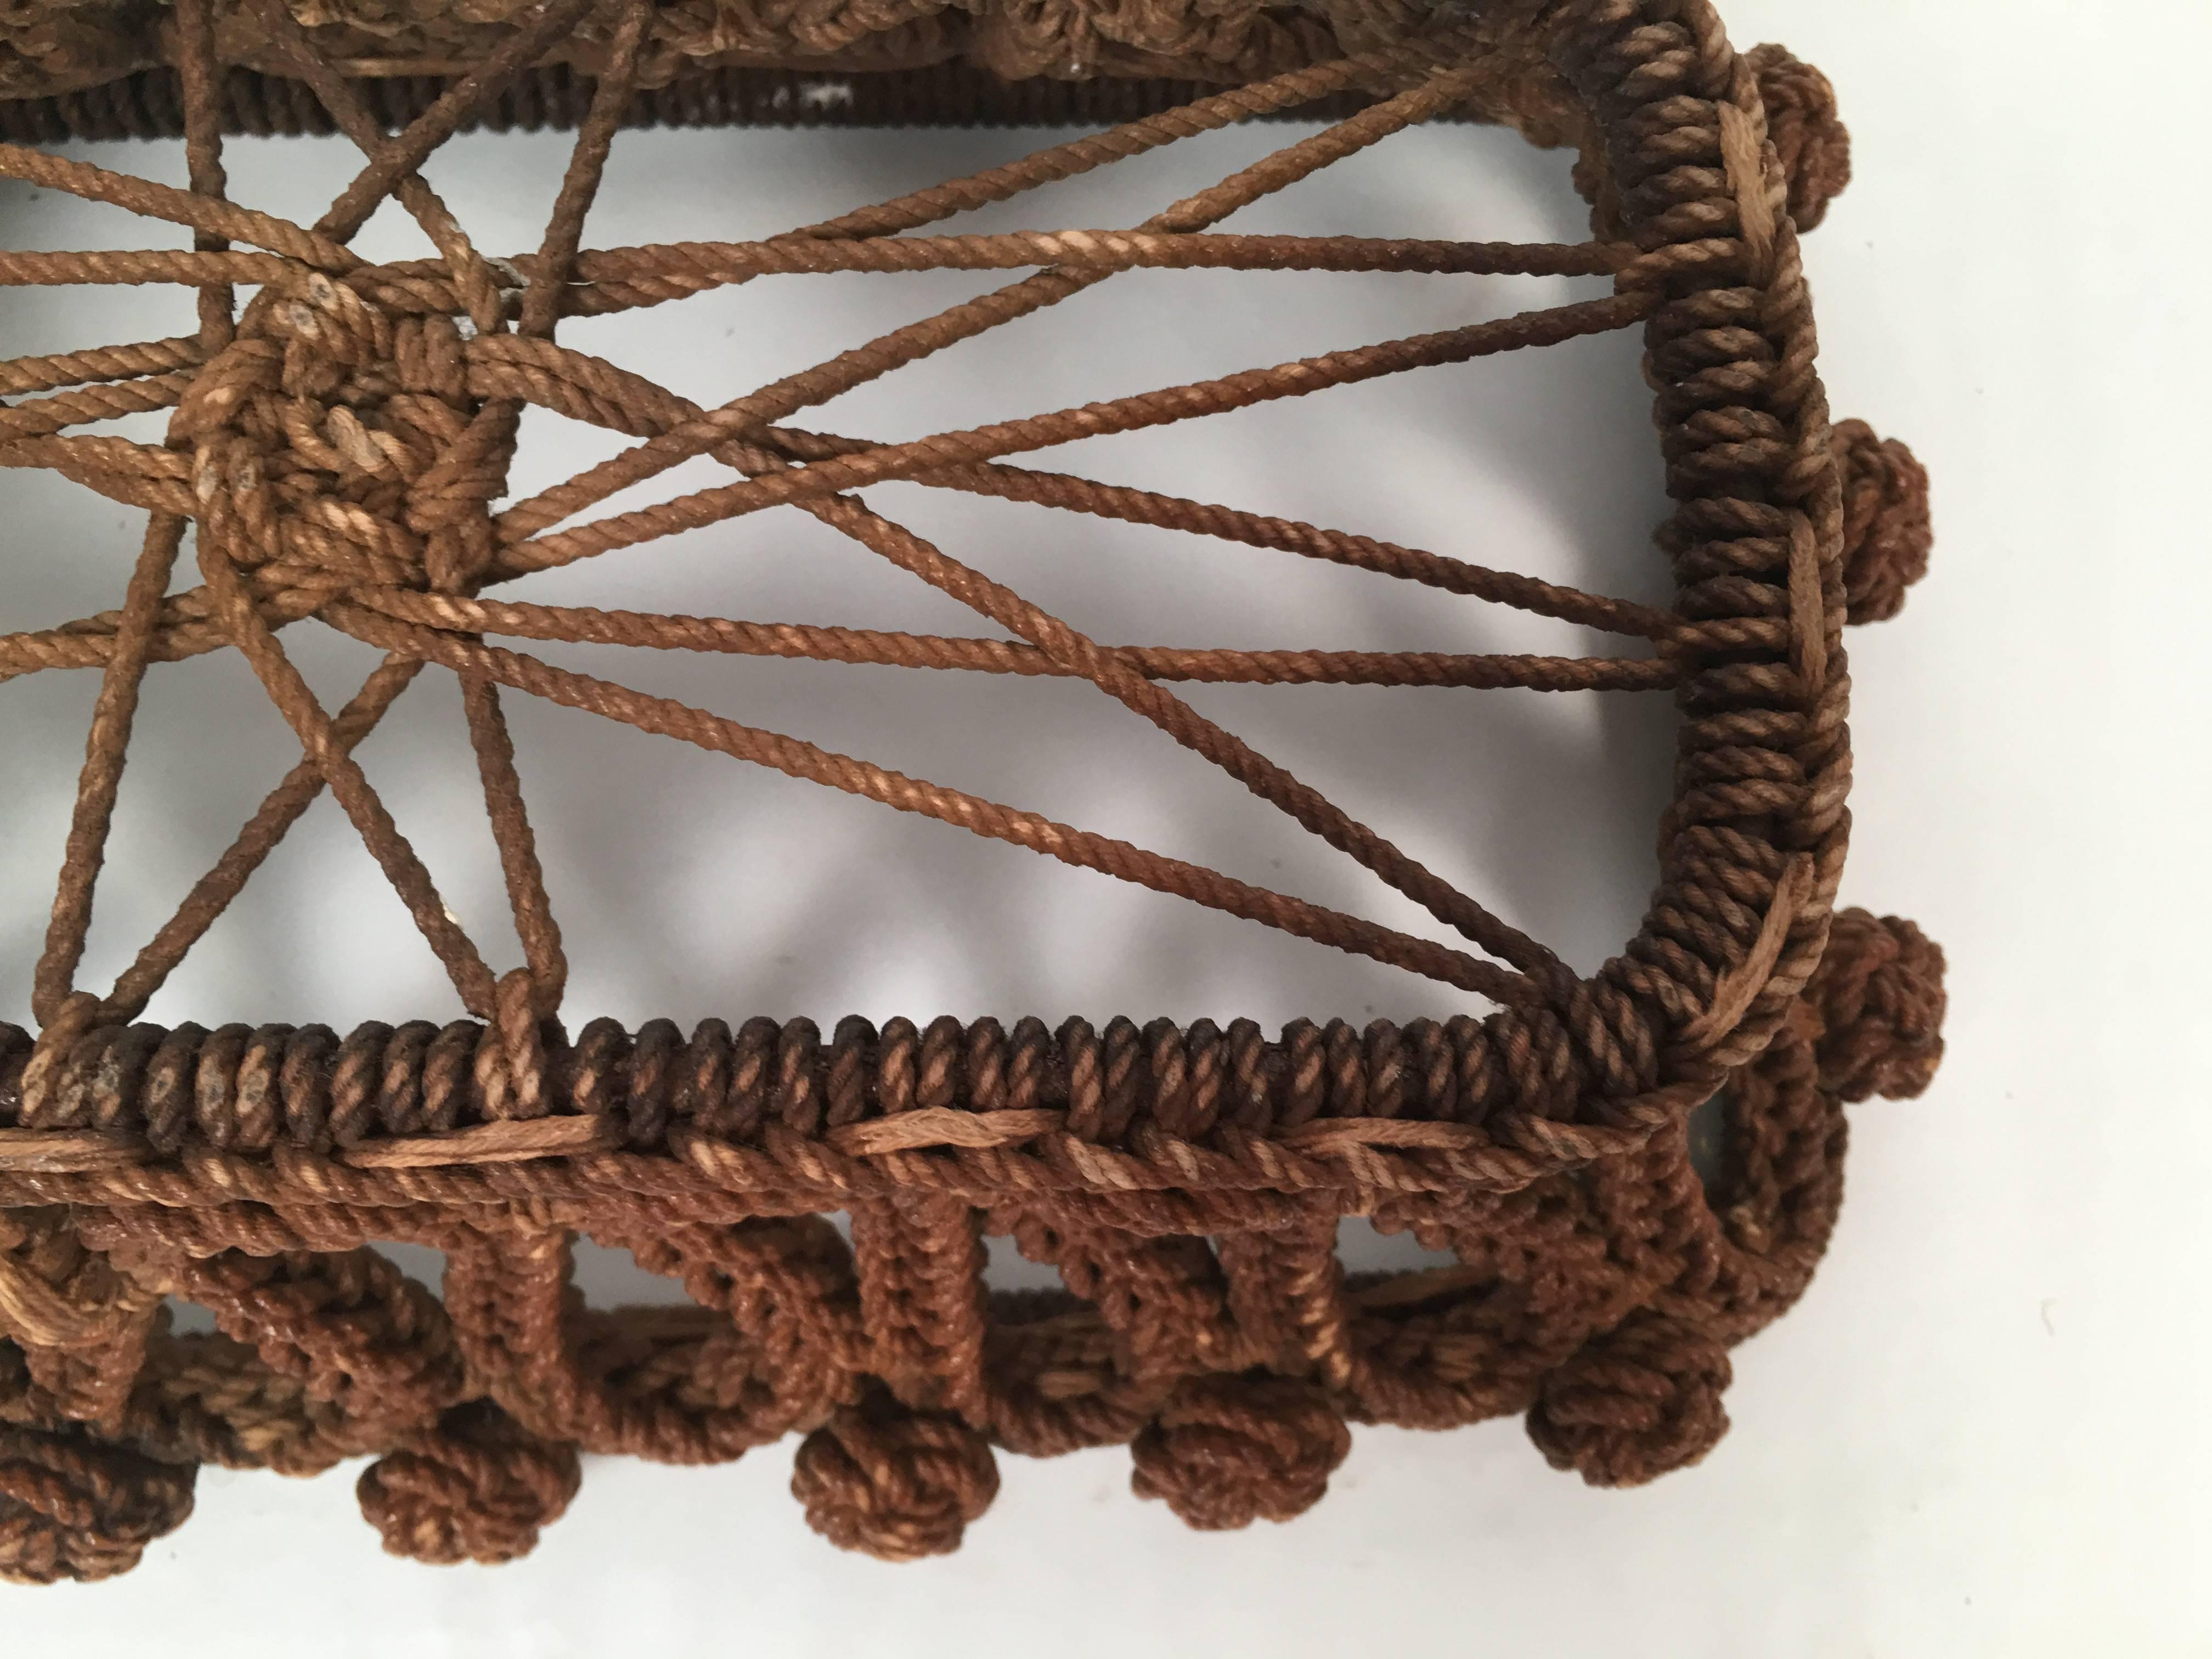 19th Century Sailor Made Ropework Basket 1